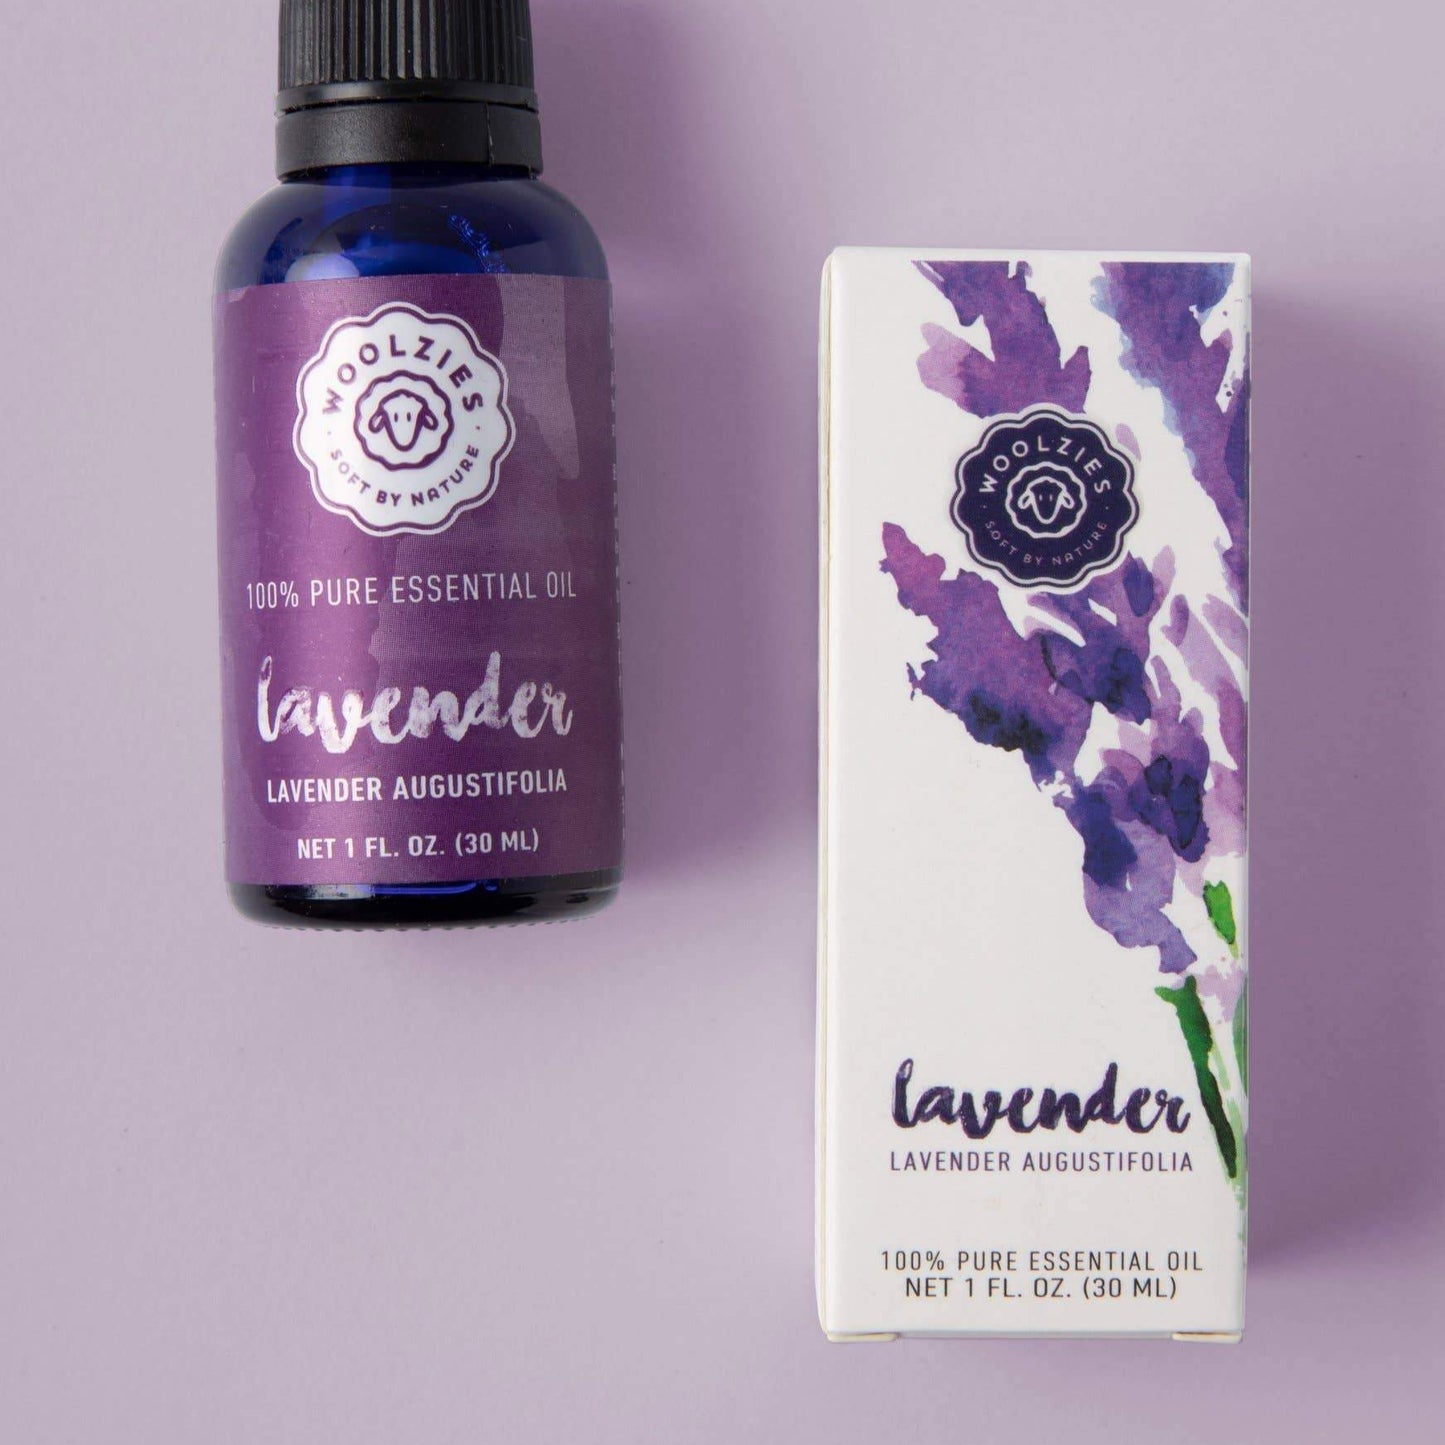 Woolzies Lavender Essential Oil, 1 Oz - lily & onyx